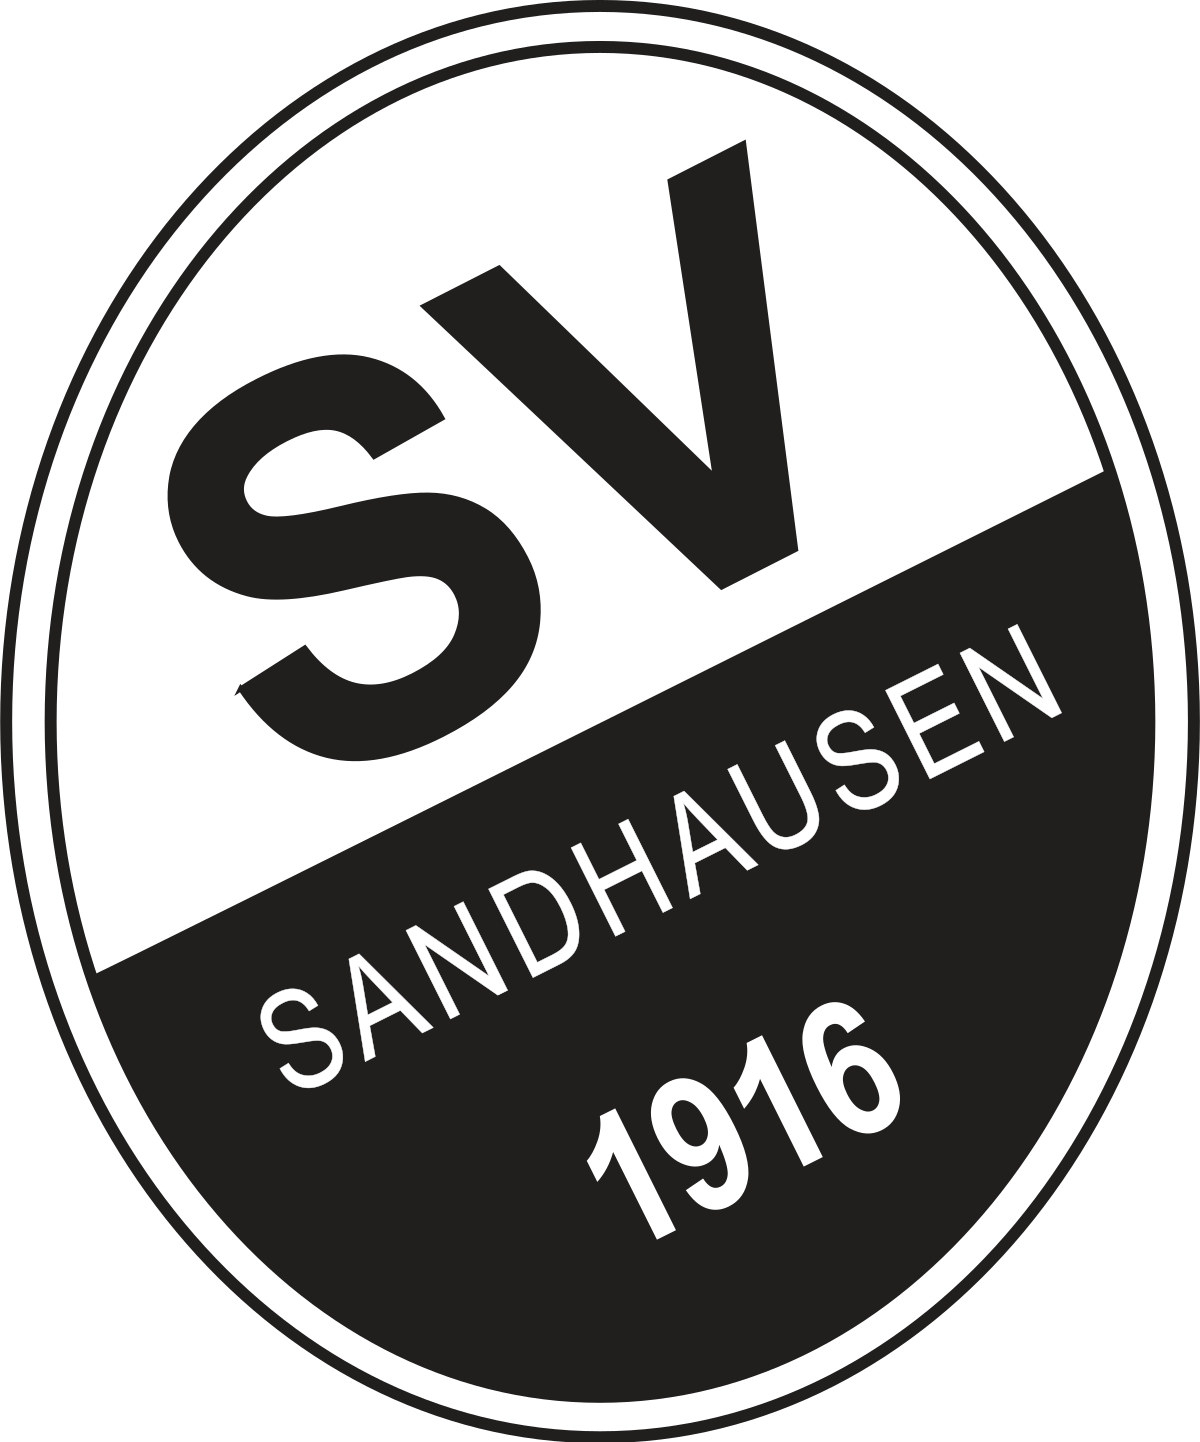 Зандхаузен U19 - Logo